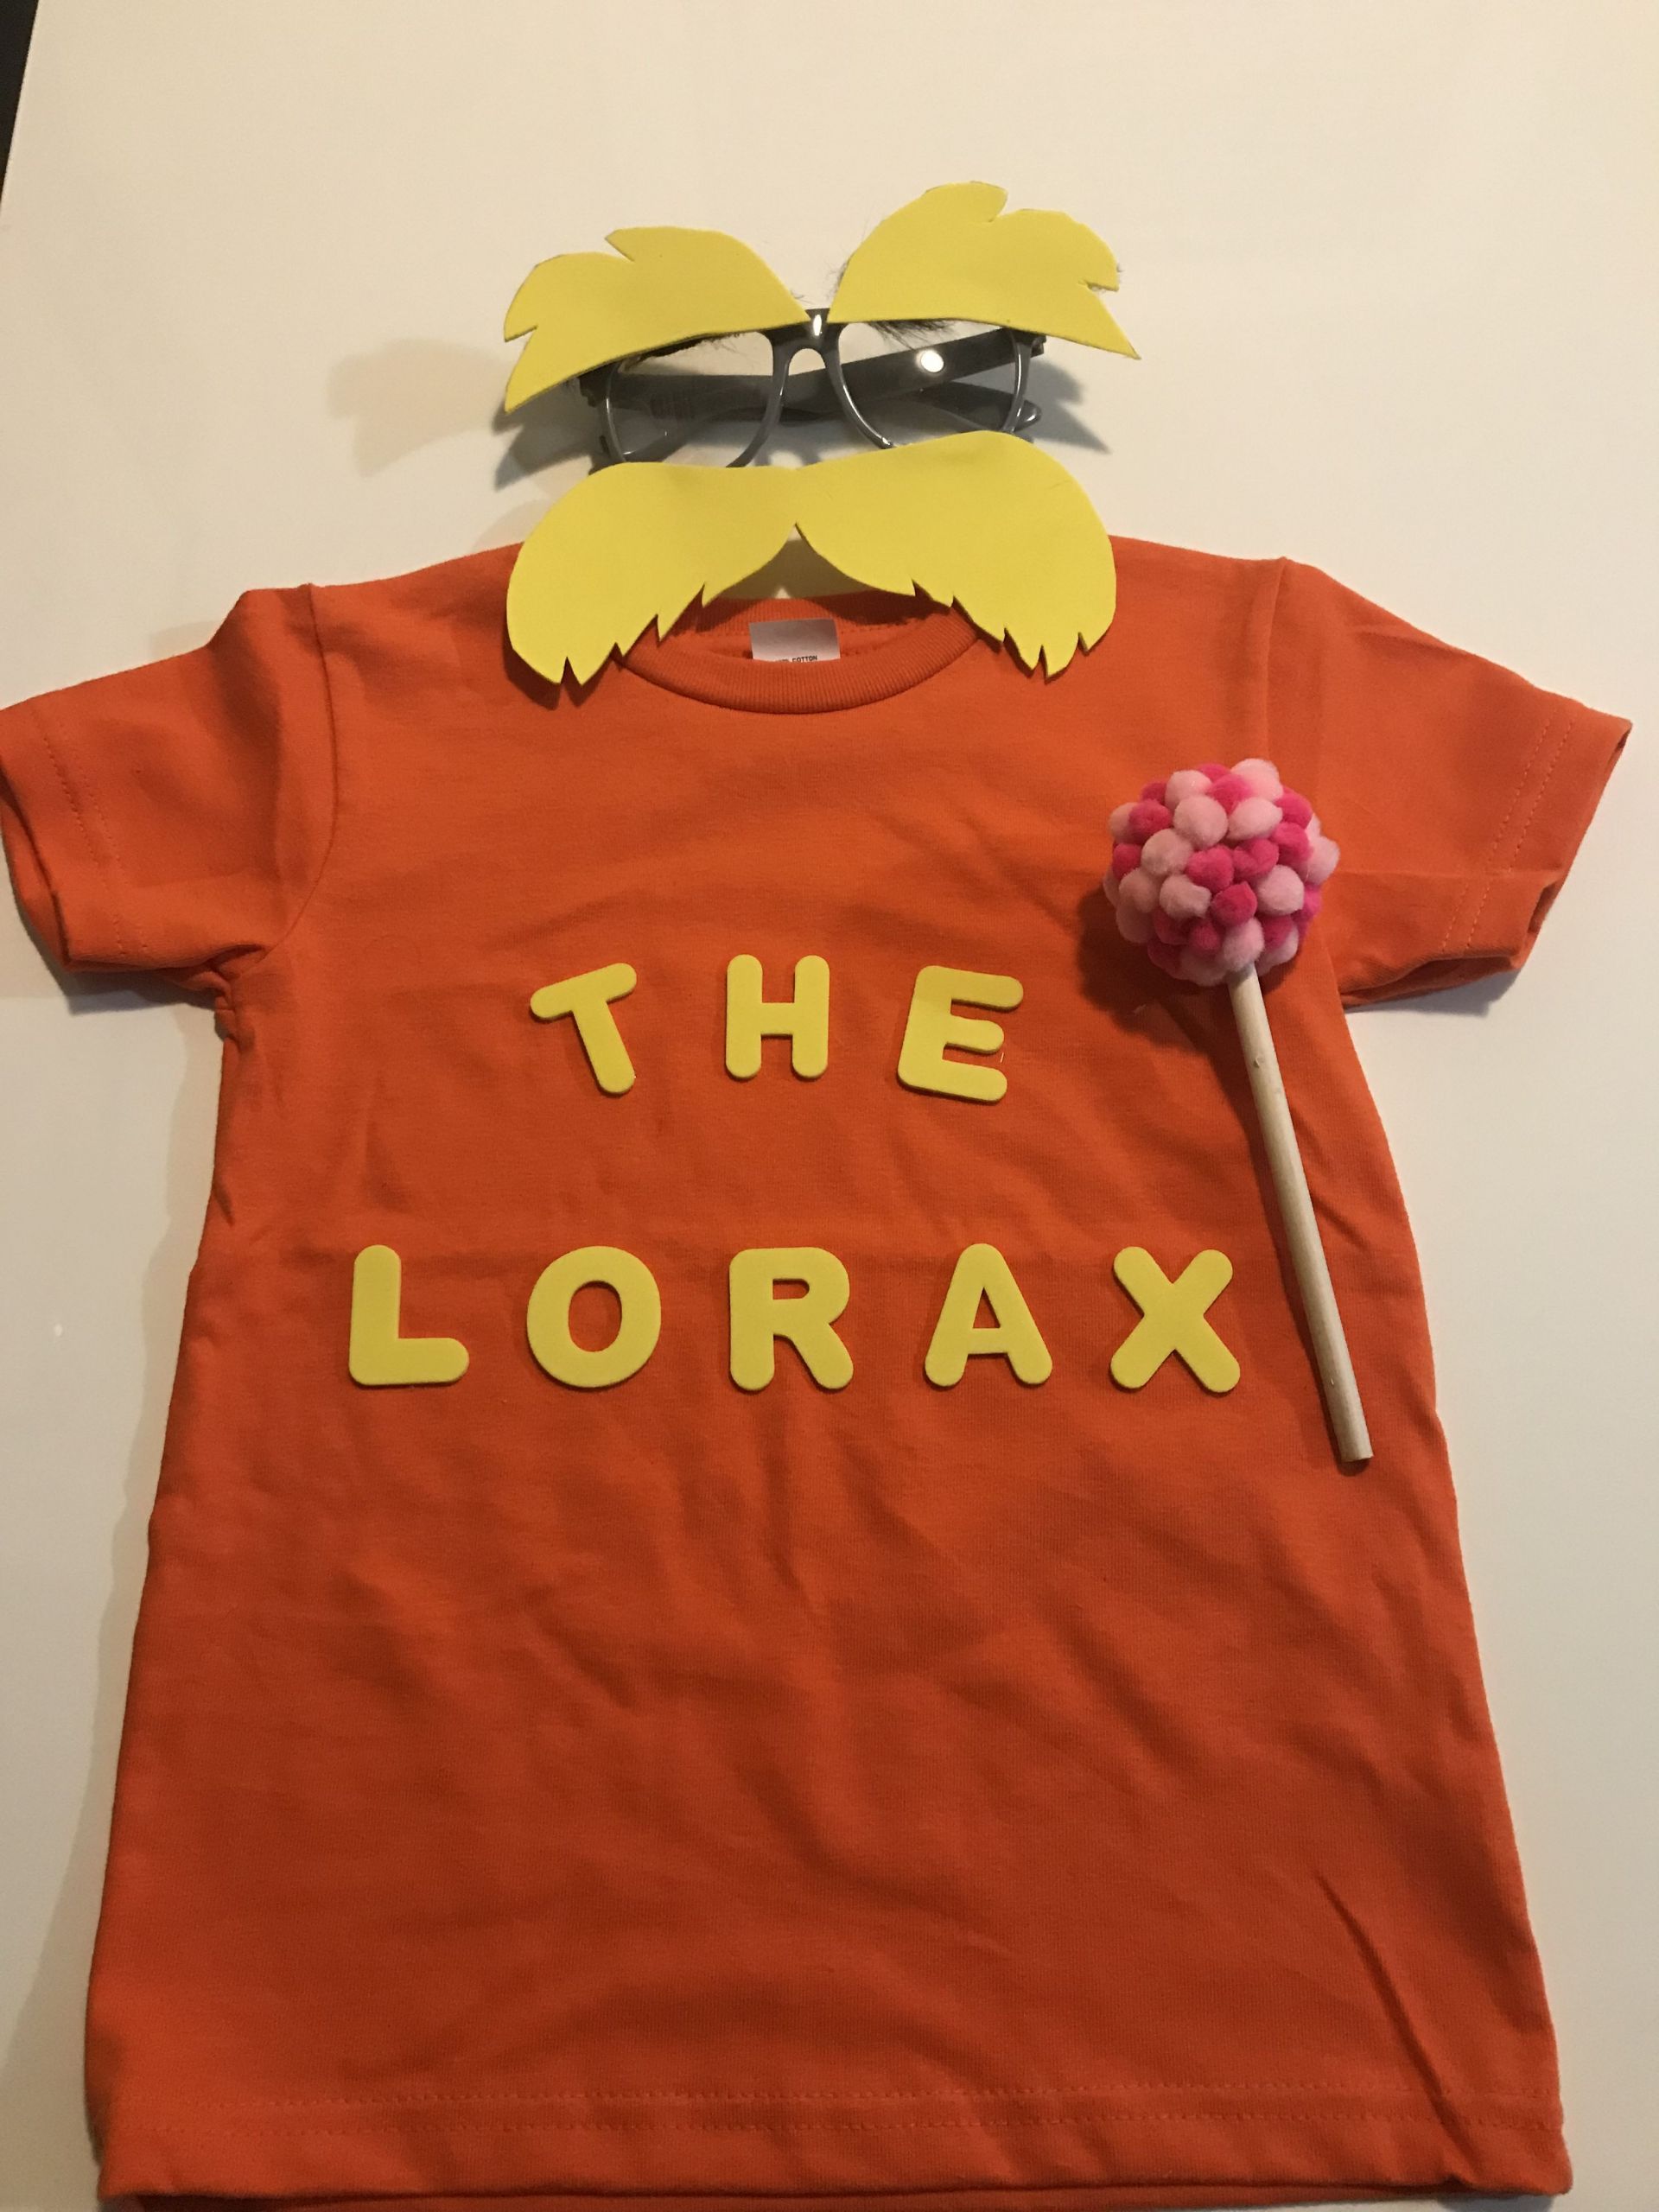 Lorax Costumes DIY
 DIY the Lorax costume